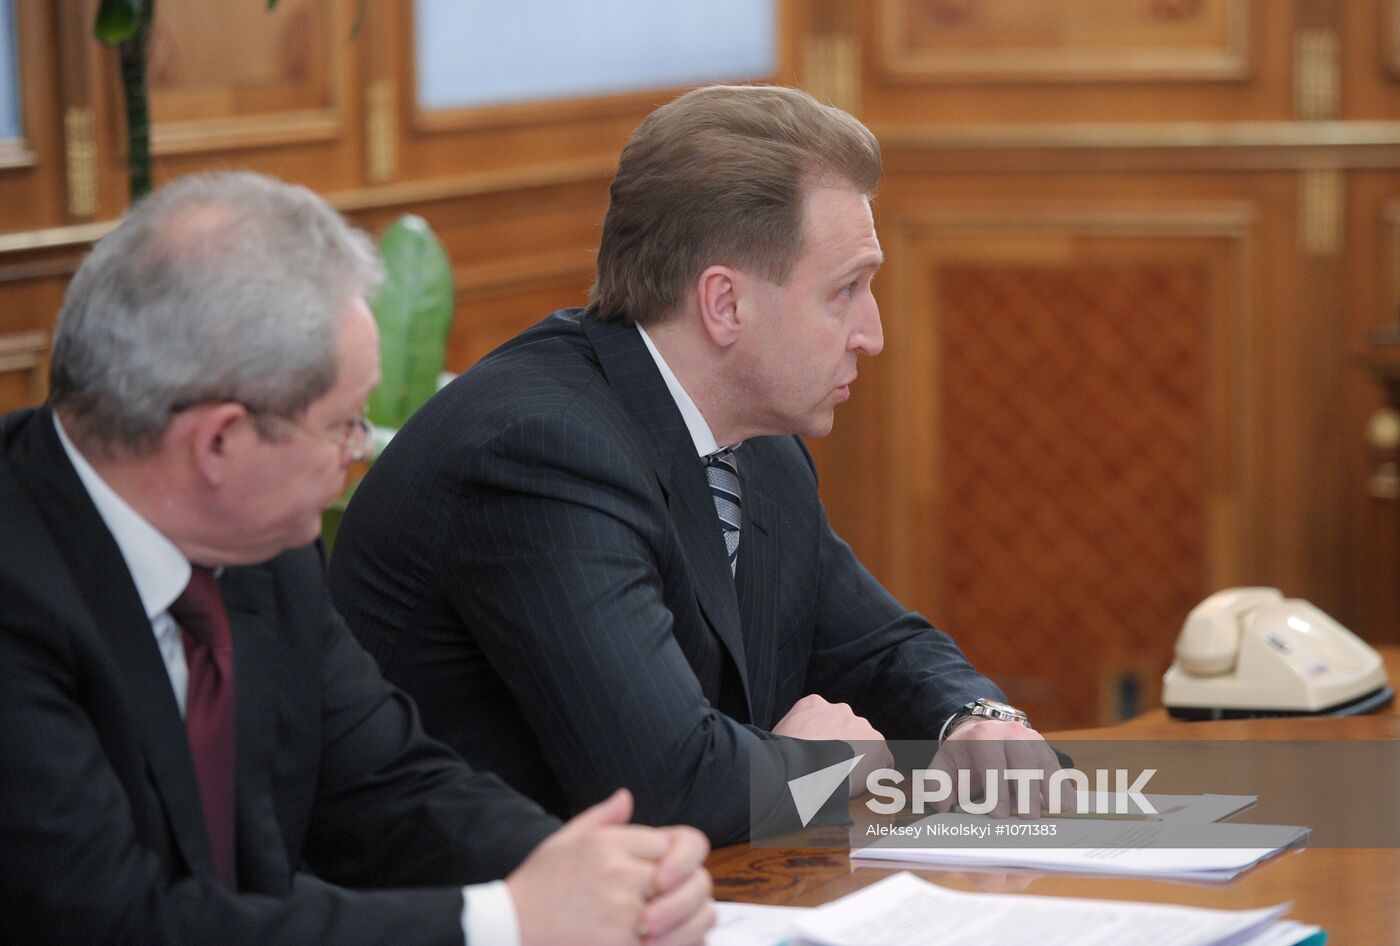 Vladimir Putin chairs meeting at Government House